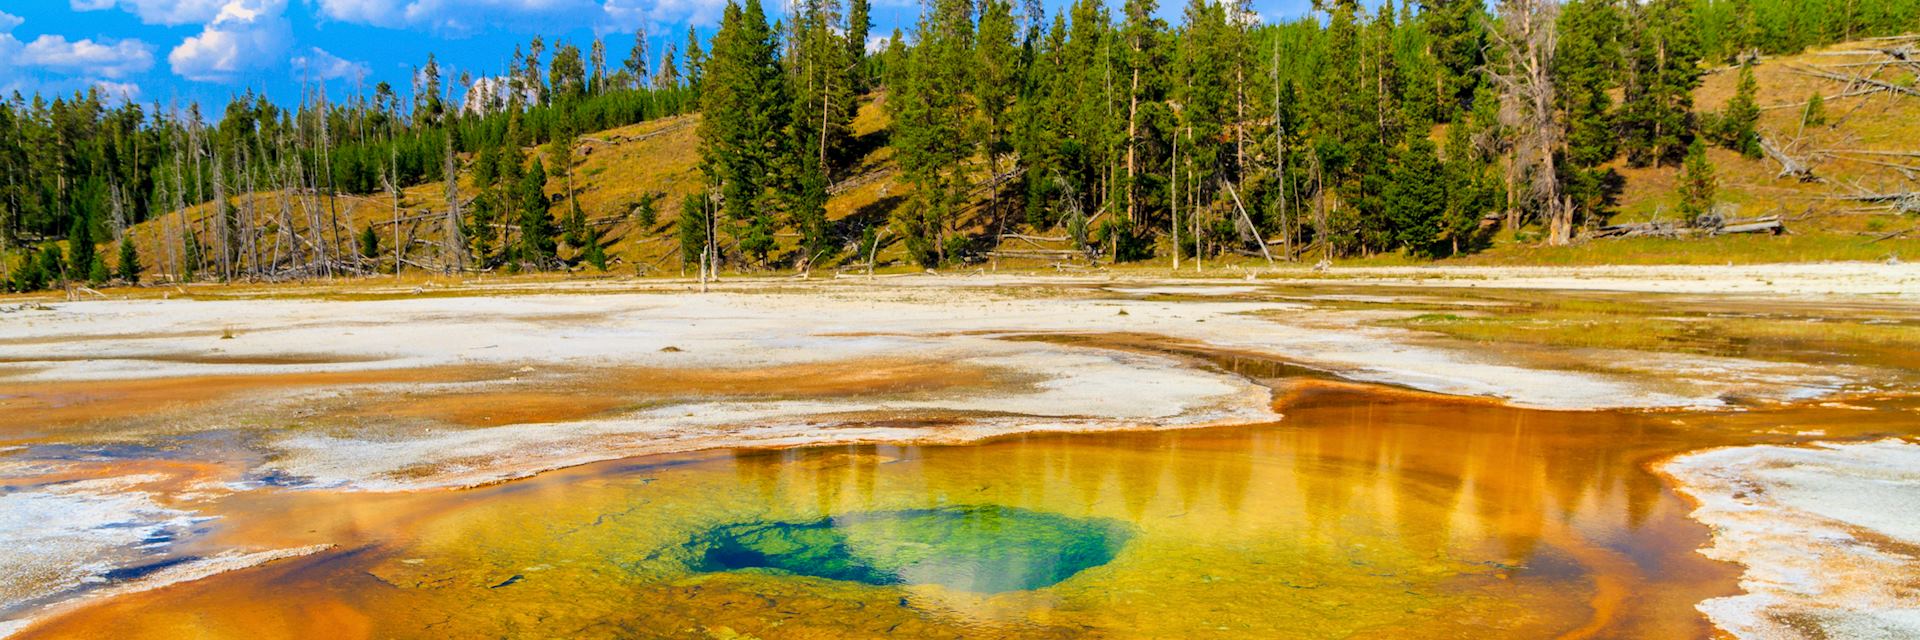 Chromatic Pool, Yellowstone National Park